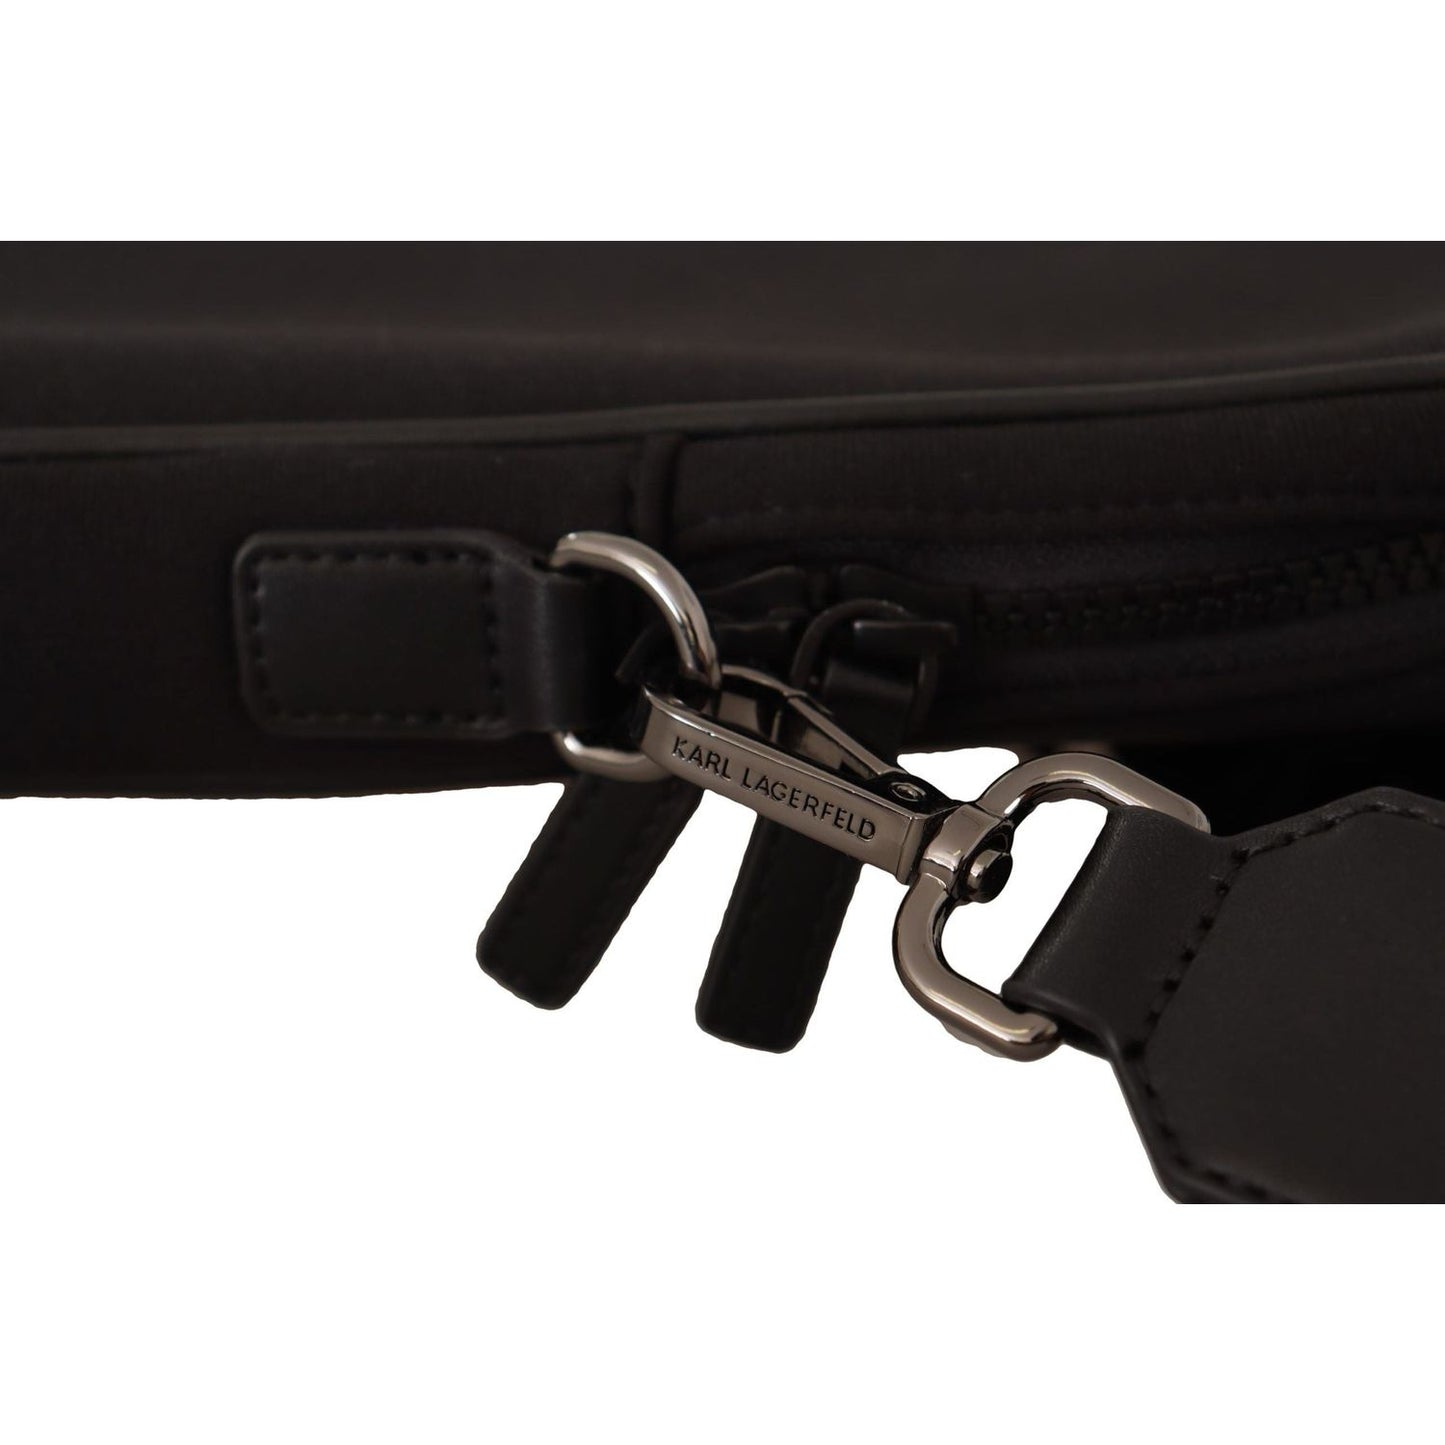 Karl Lagerfeld Sleek Nylon Laptop Crossbody Bag For Sophisticated Style black-nylon-laptop-crossbody-bag IMG_7551-scaled-4bcb3fce-1f1.jpg